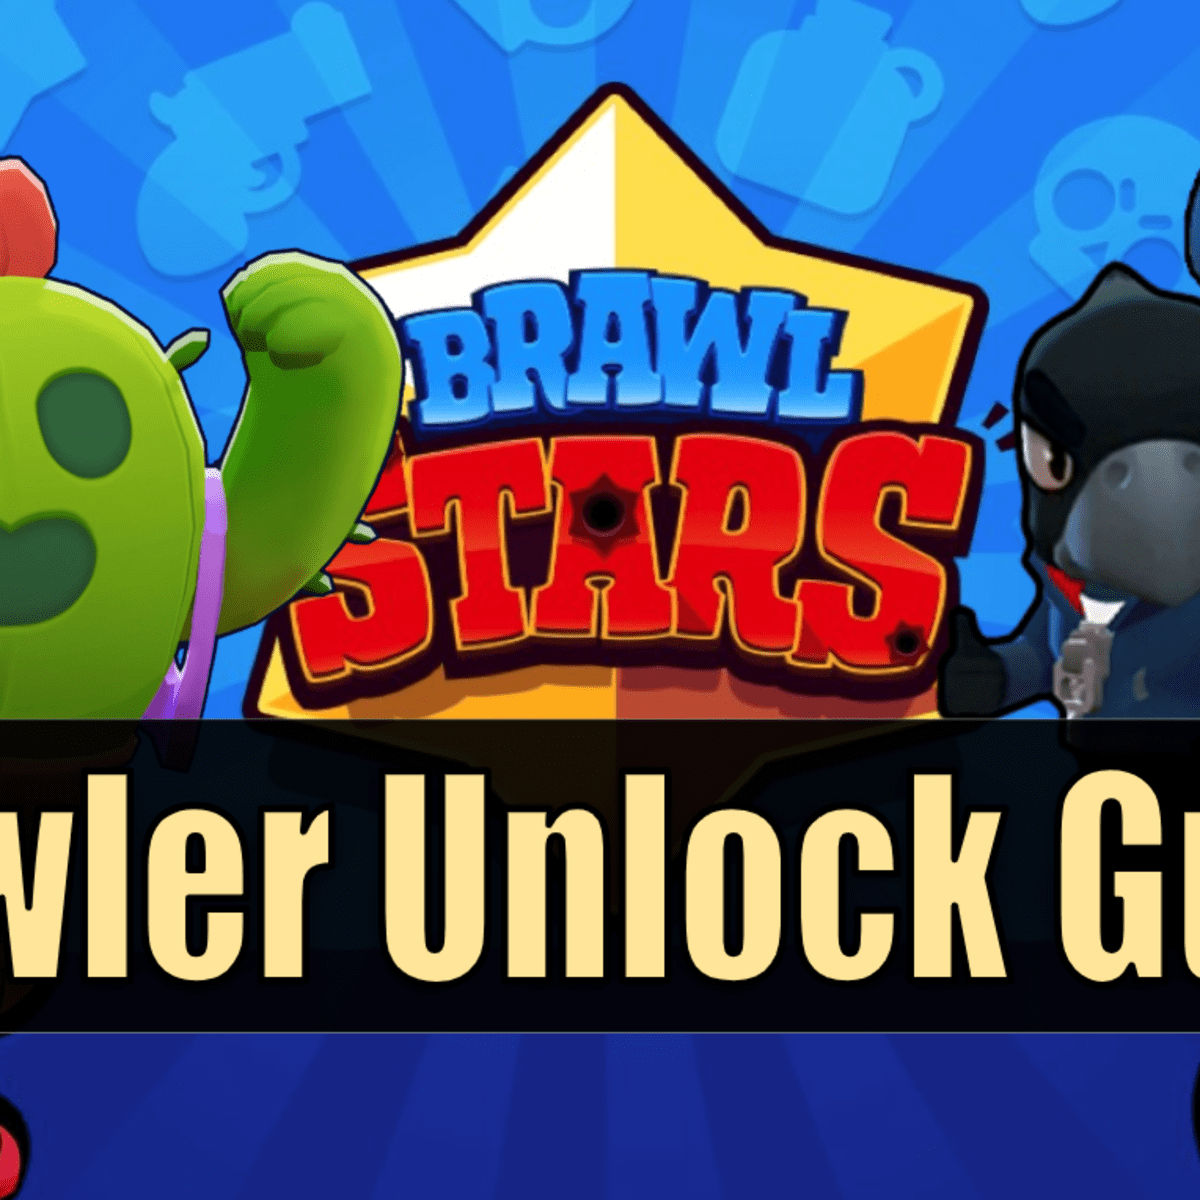 Brawl Stars Brawler Unlock Guide Levelskip - brawl stars doesn't open